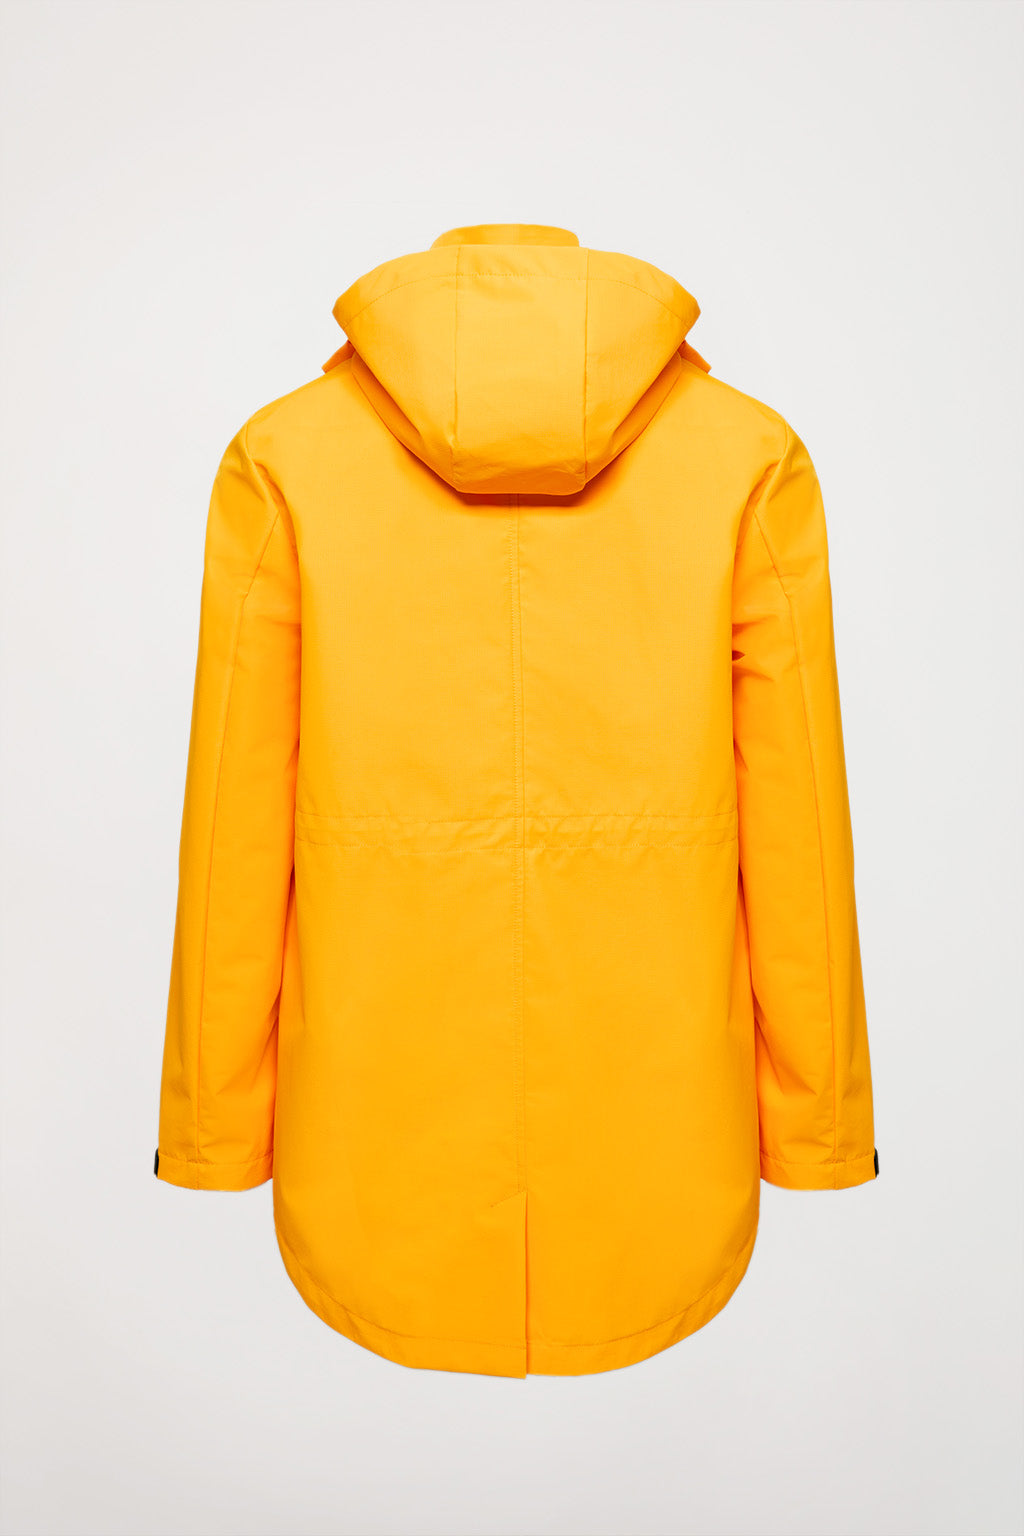 Chubasquero ligero amarillo con capucha y parche en la manga | HOMBRE  | POLO CLUB